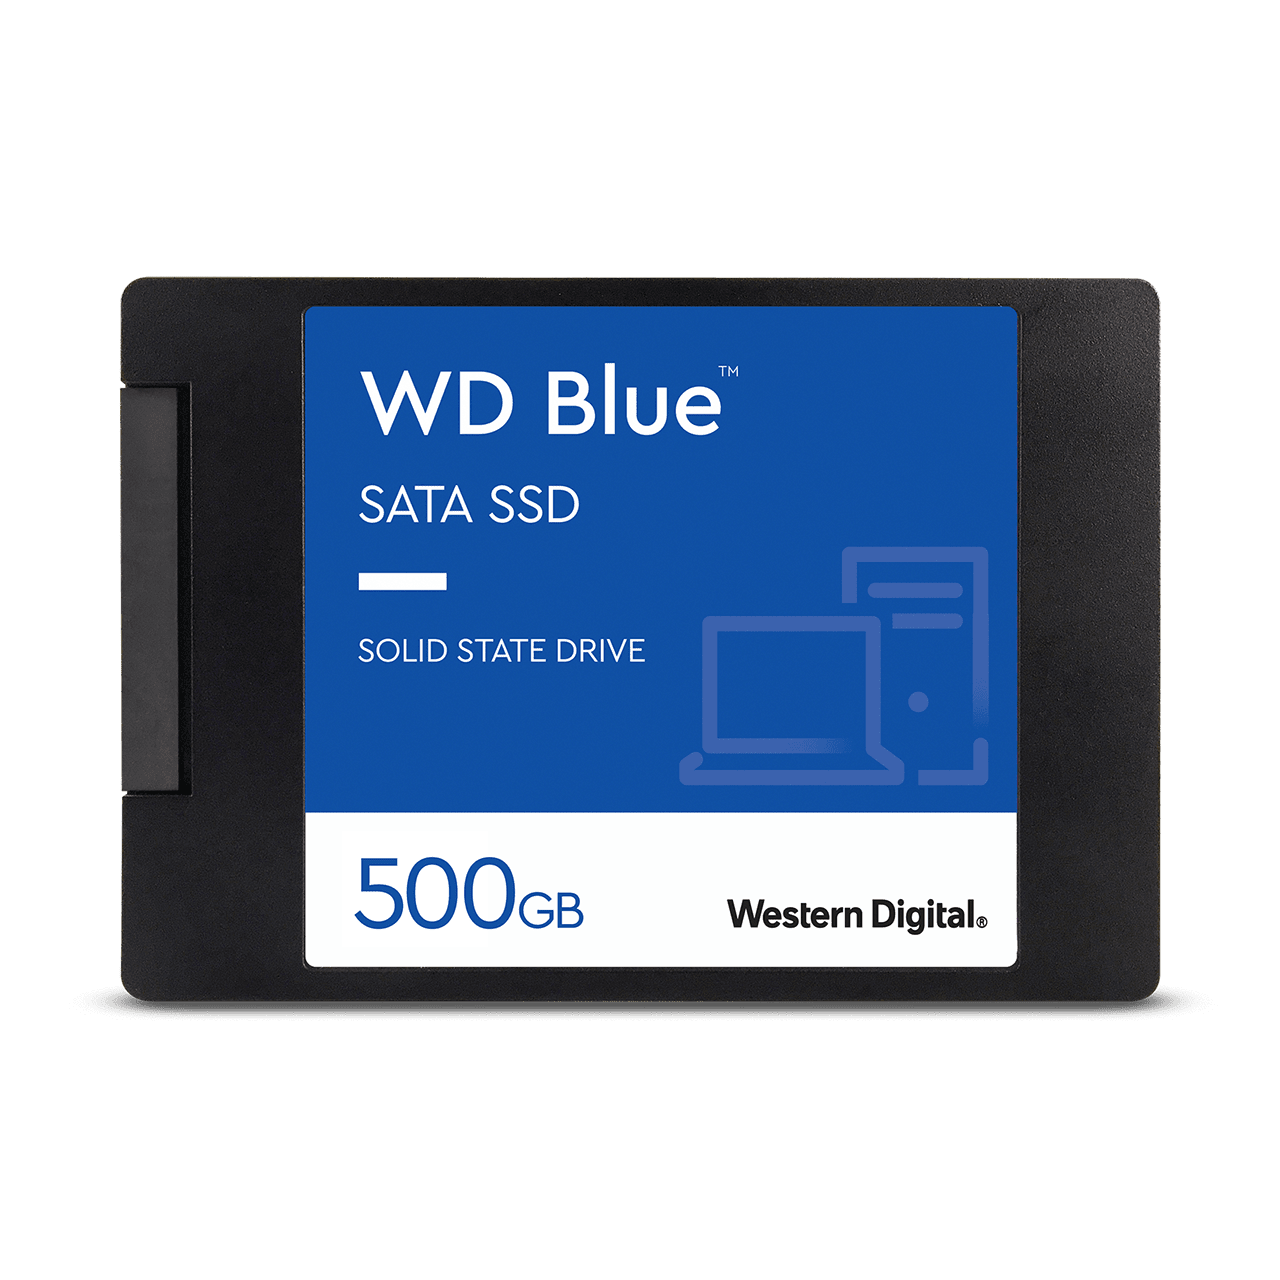 WD Blue™ SATA SSD - 500GB - Image2